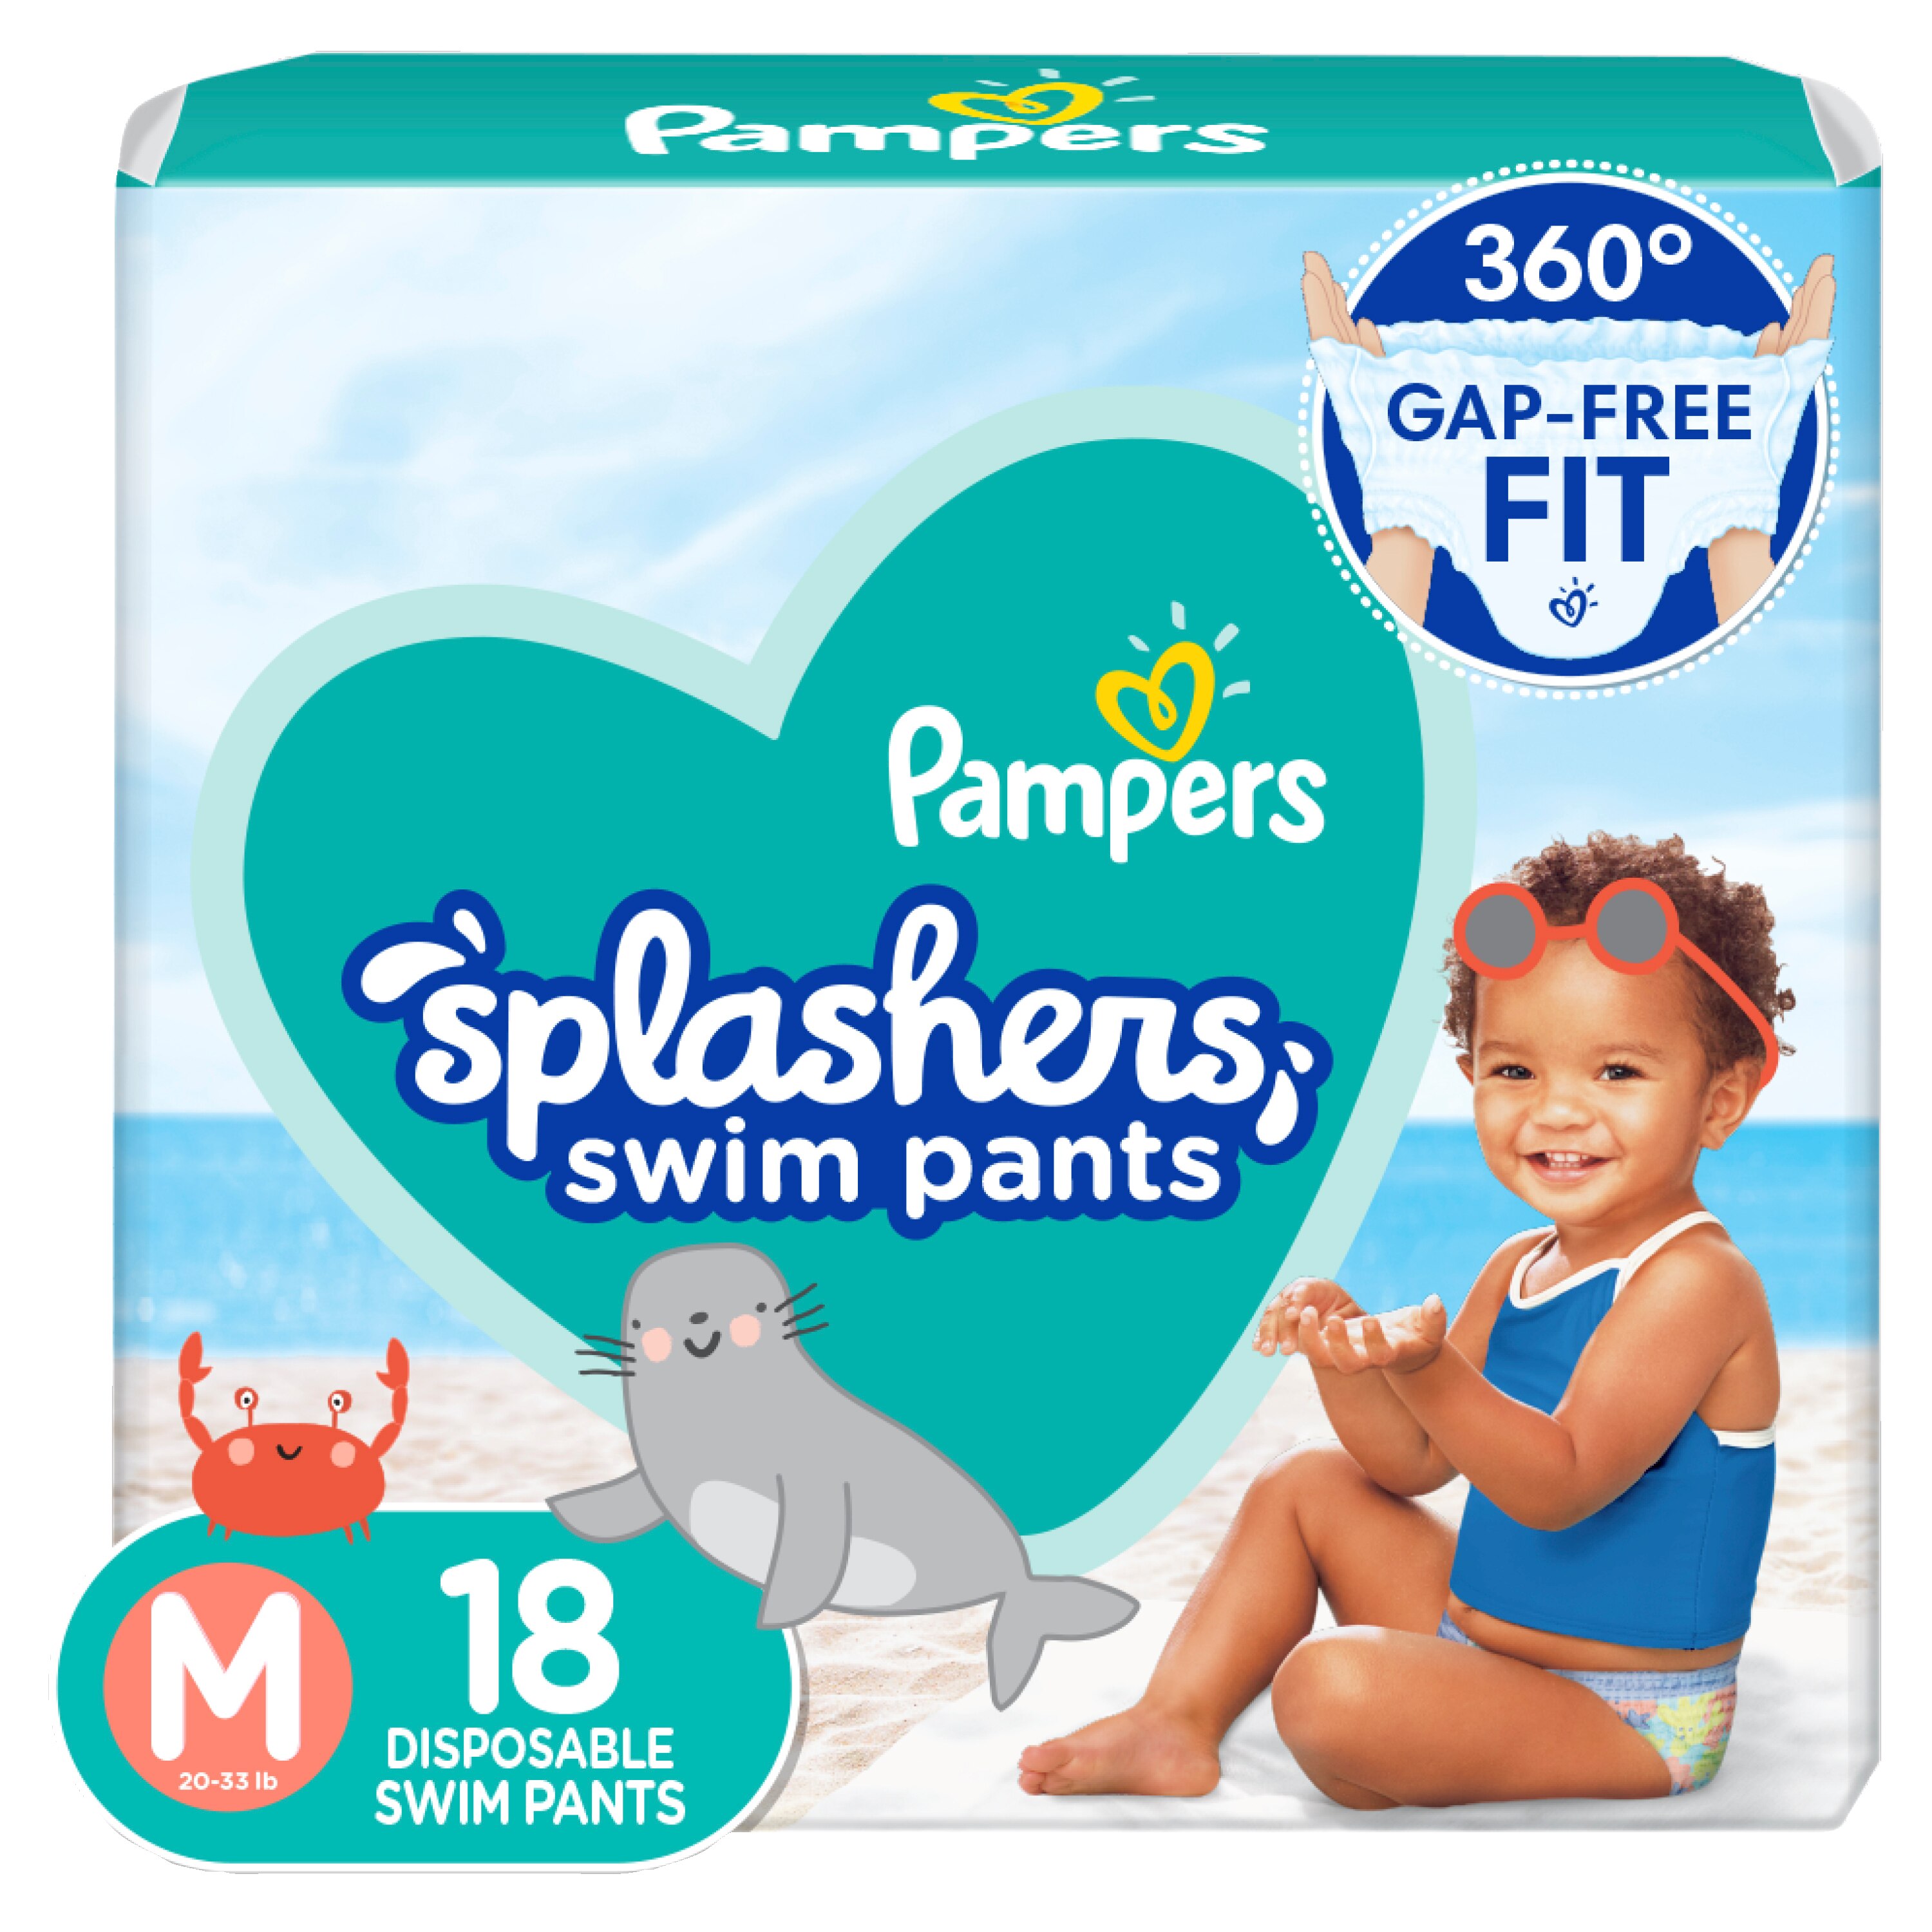 Pampers Splashers - Pañales desechables para nadar